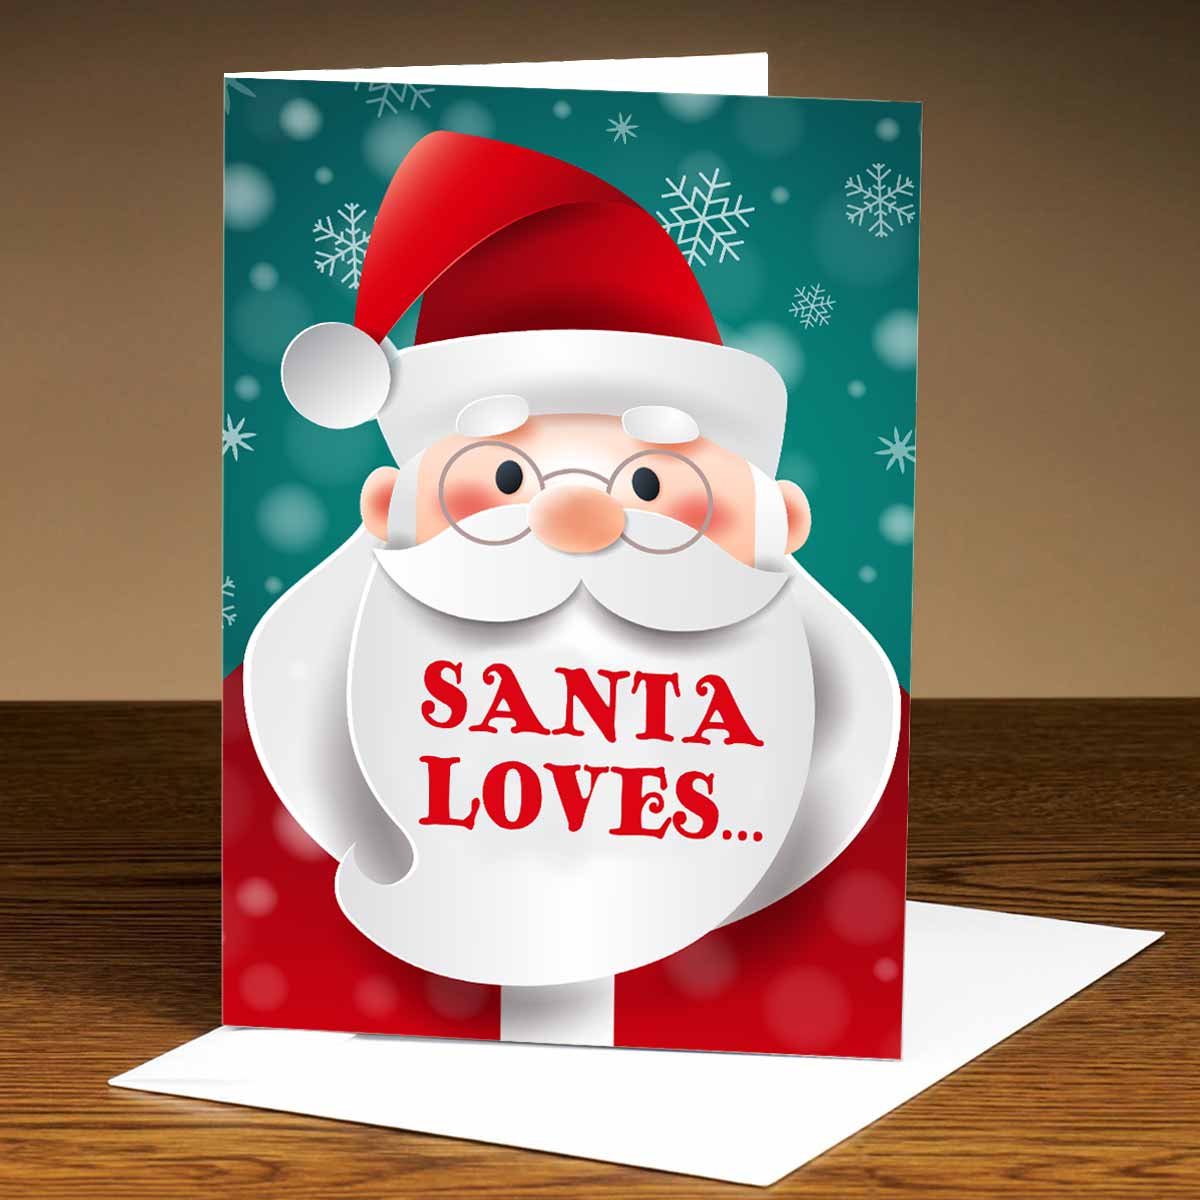 Personalised Santa Loves? Christmas Wishes Mirror Greeting Card